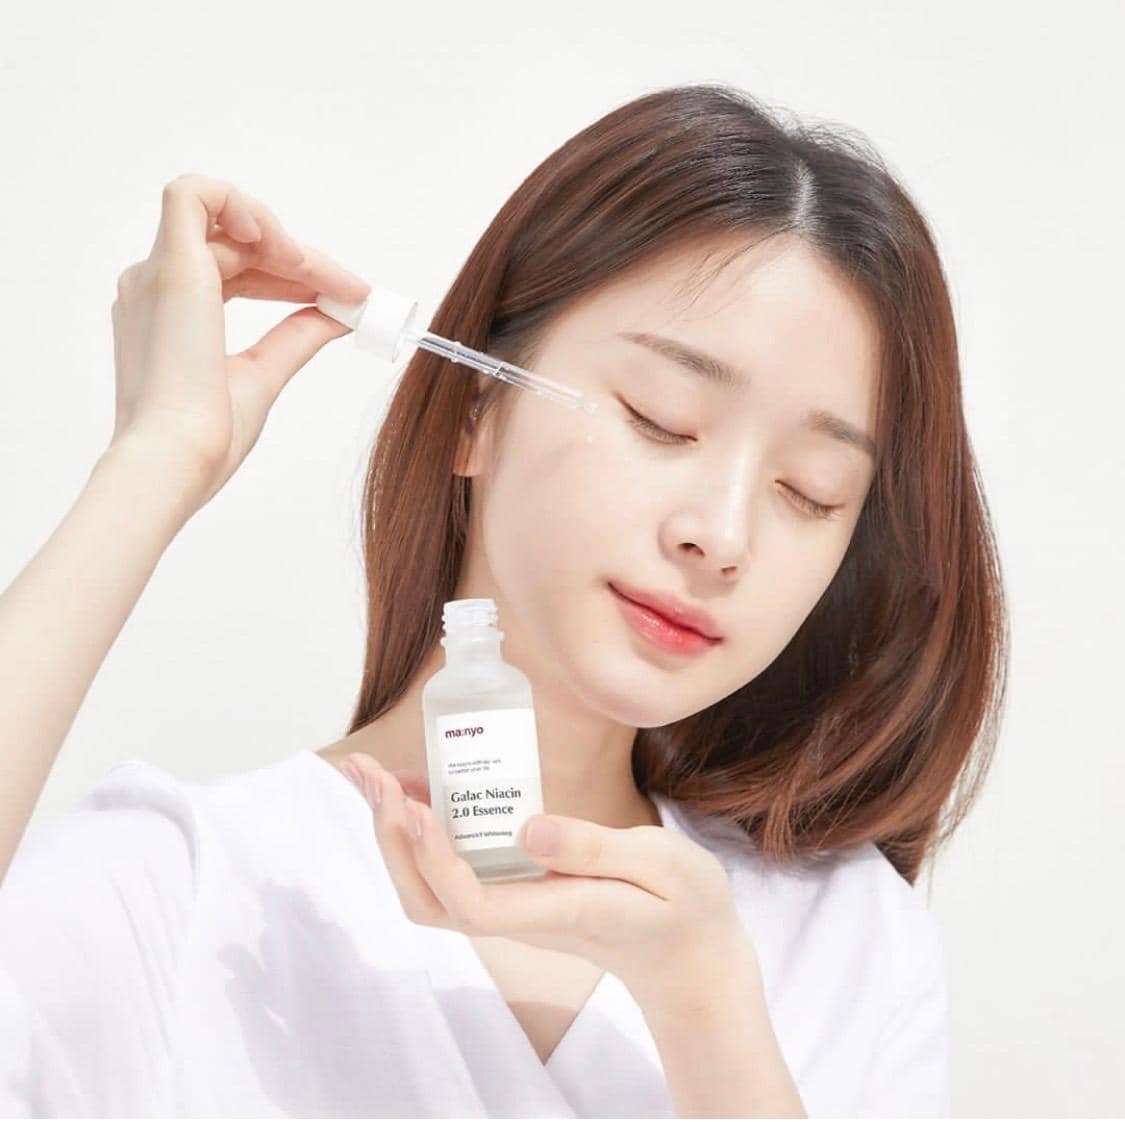 MANYO FACTORY Galactomy Niacin Essence Korean Niacinamide Facial Serum,  Treats Dull Skin, Uneven Skin Tone for Women and Men, Essential Skincare